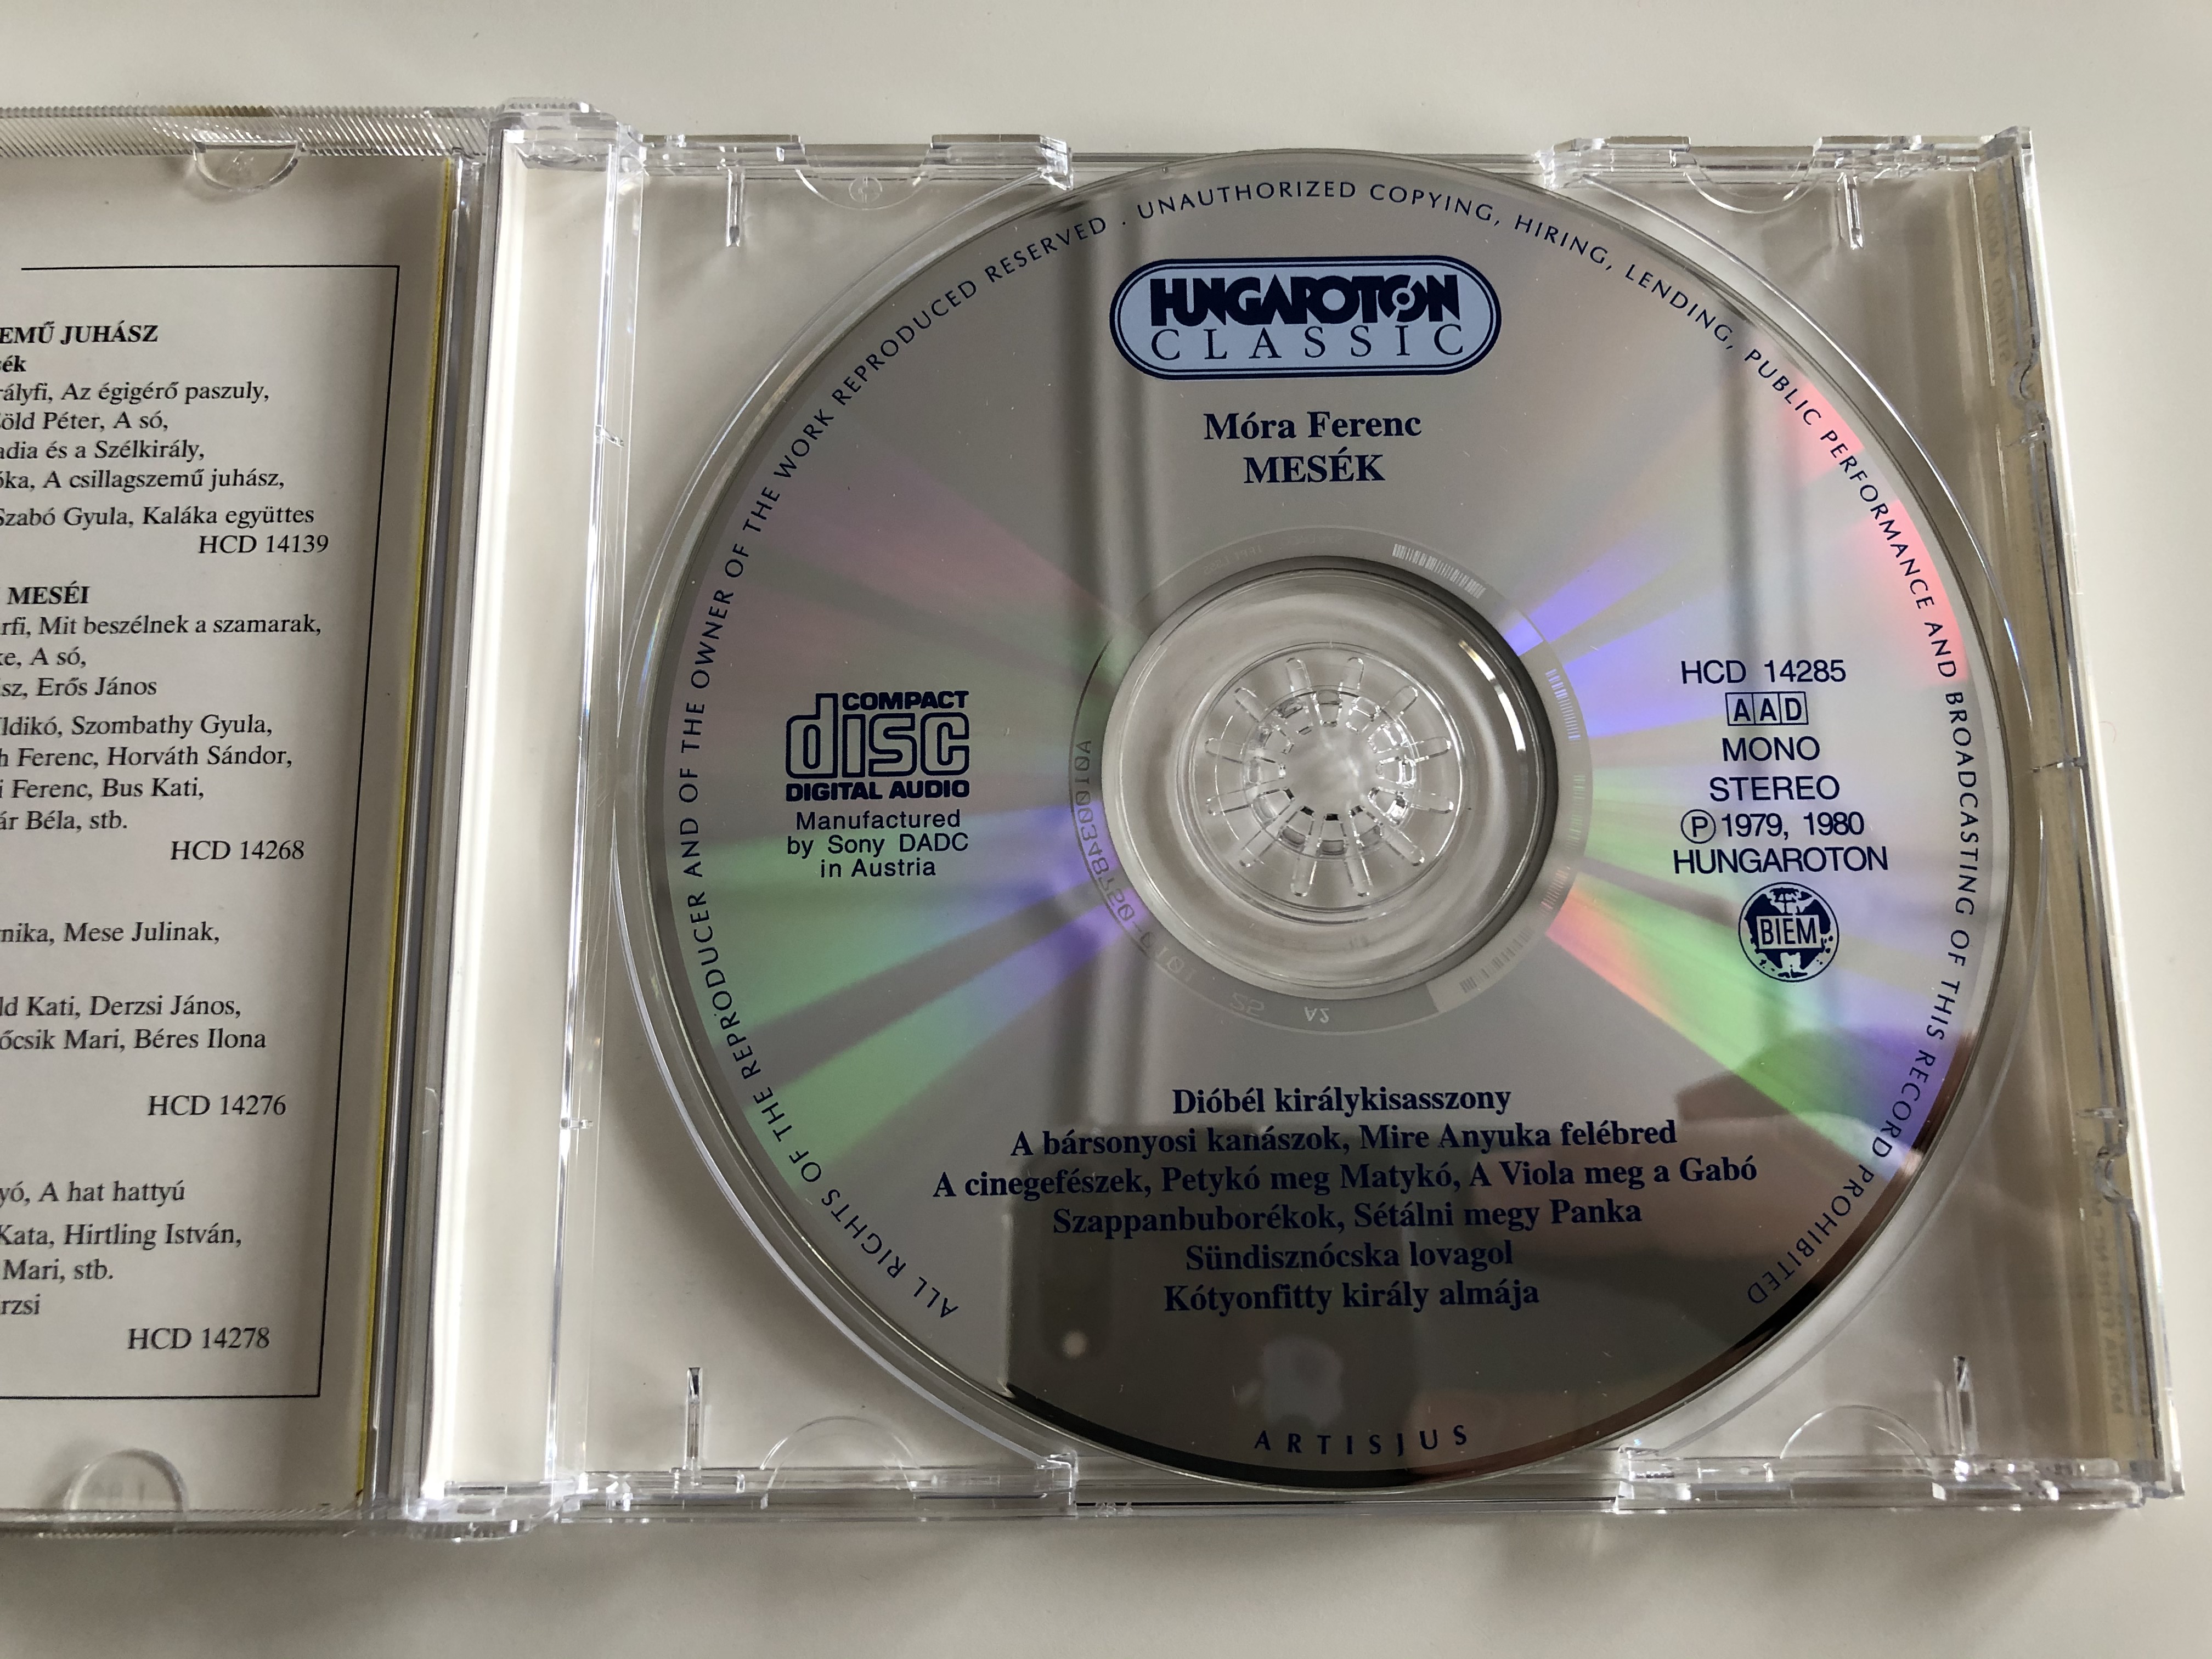 mora-ferenc-mesek-sundisznocska-lovagol-diobel-kiralykisasszony-a-barsonyosi-kanaszok-mire-anyuka-felebred-a-cinegefeszek-petyko-meg-matyko-hungaroton-classic-audio-cd-2000-stereo-m-3-.jpg